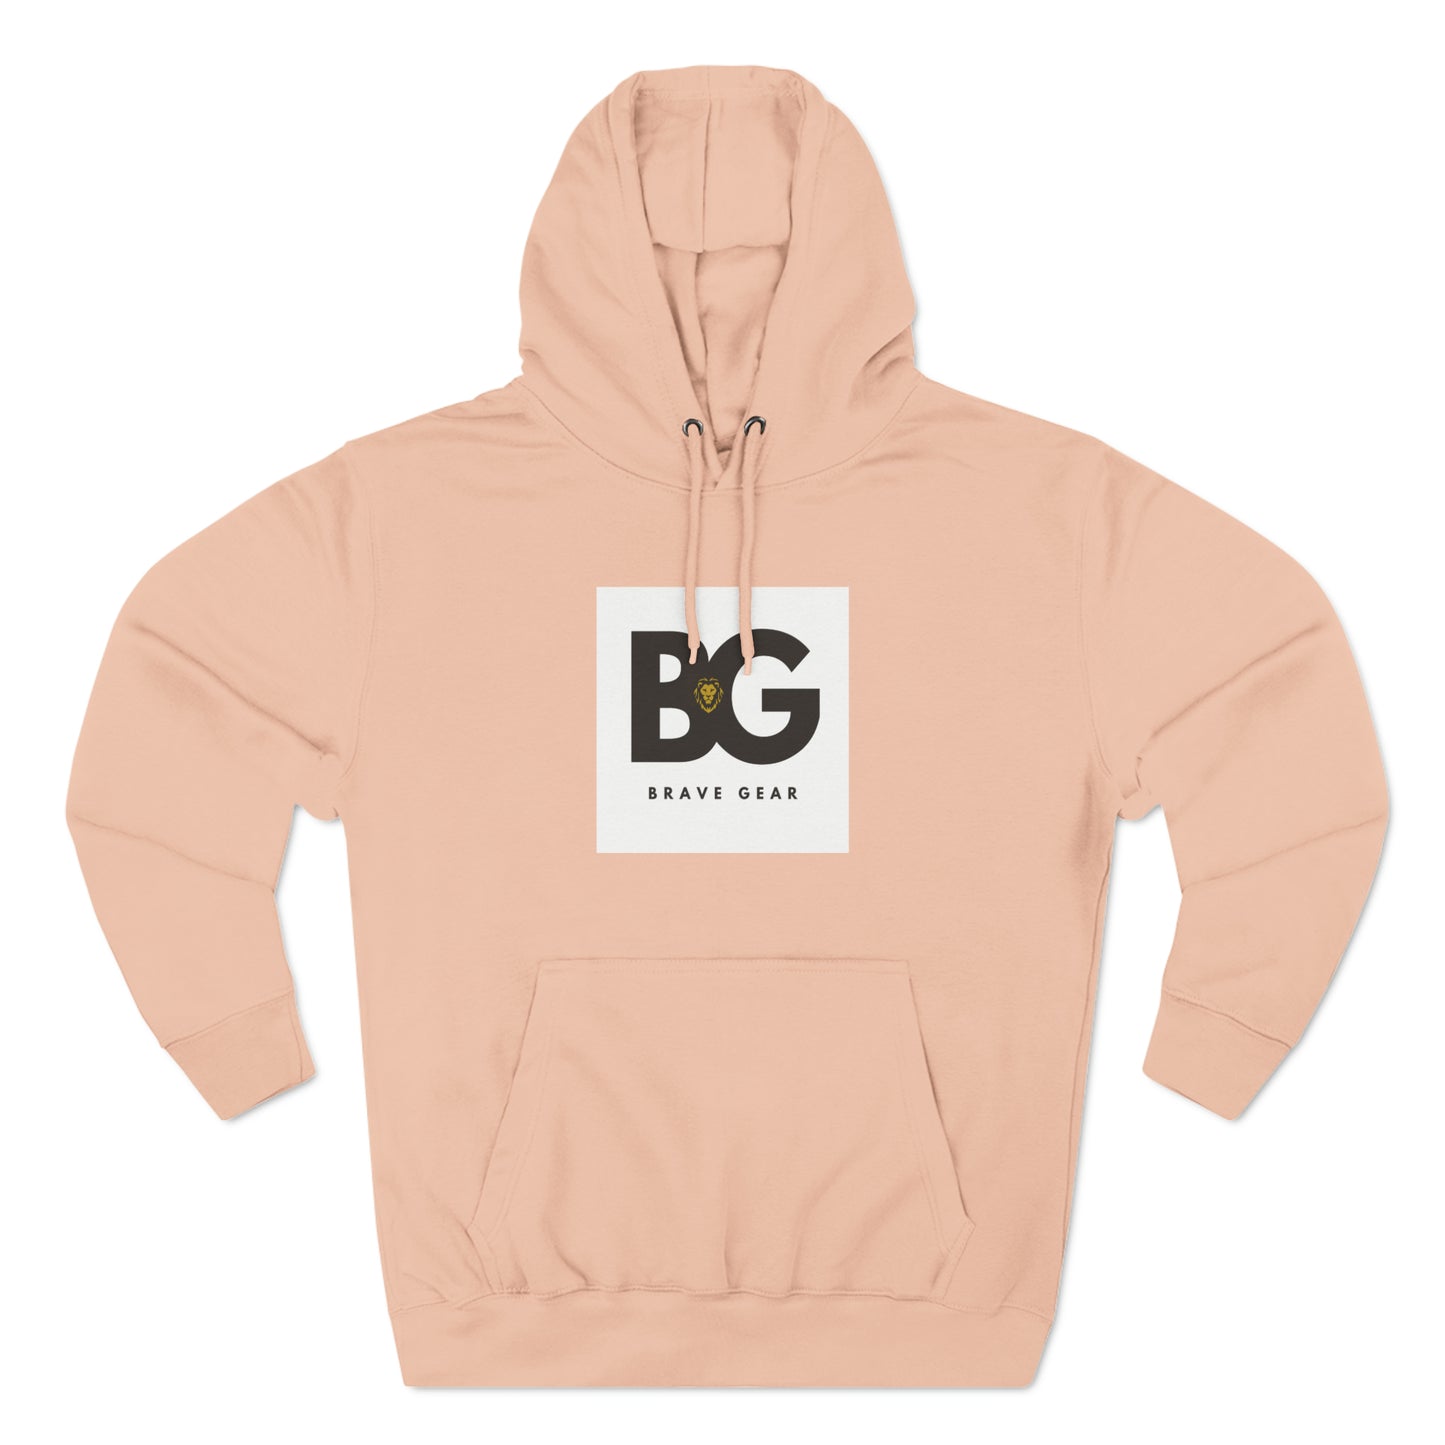 BG box logo Premium Pullover Hoodie